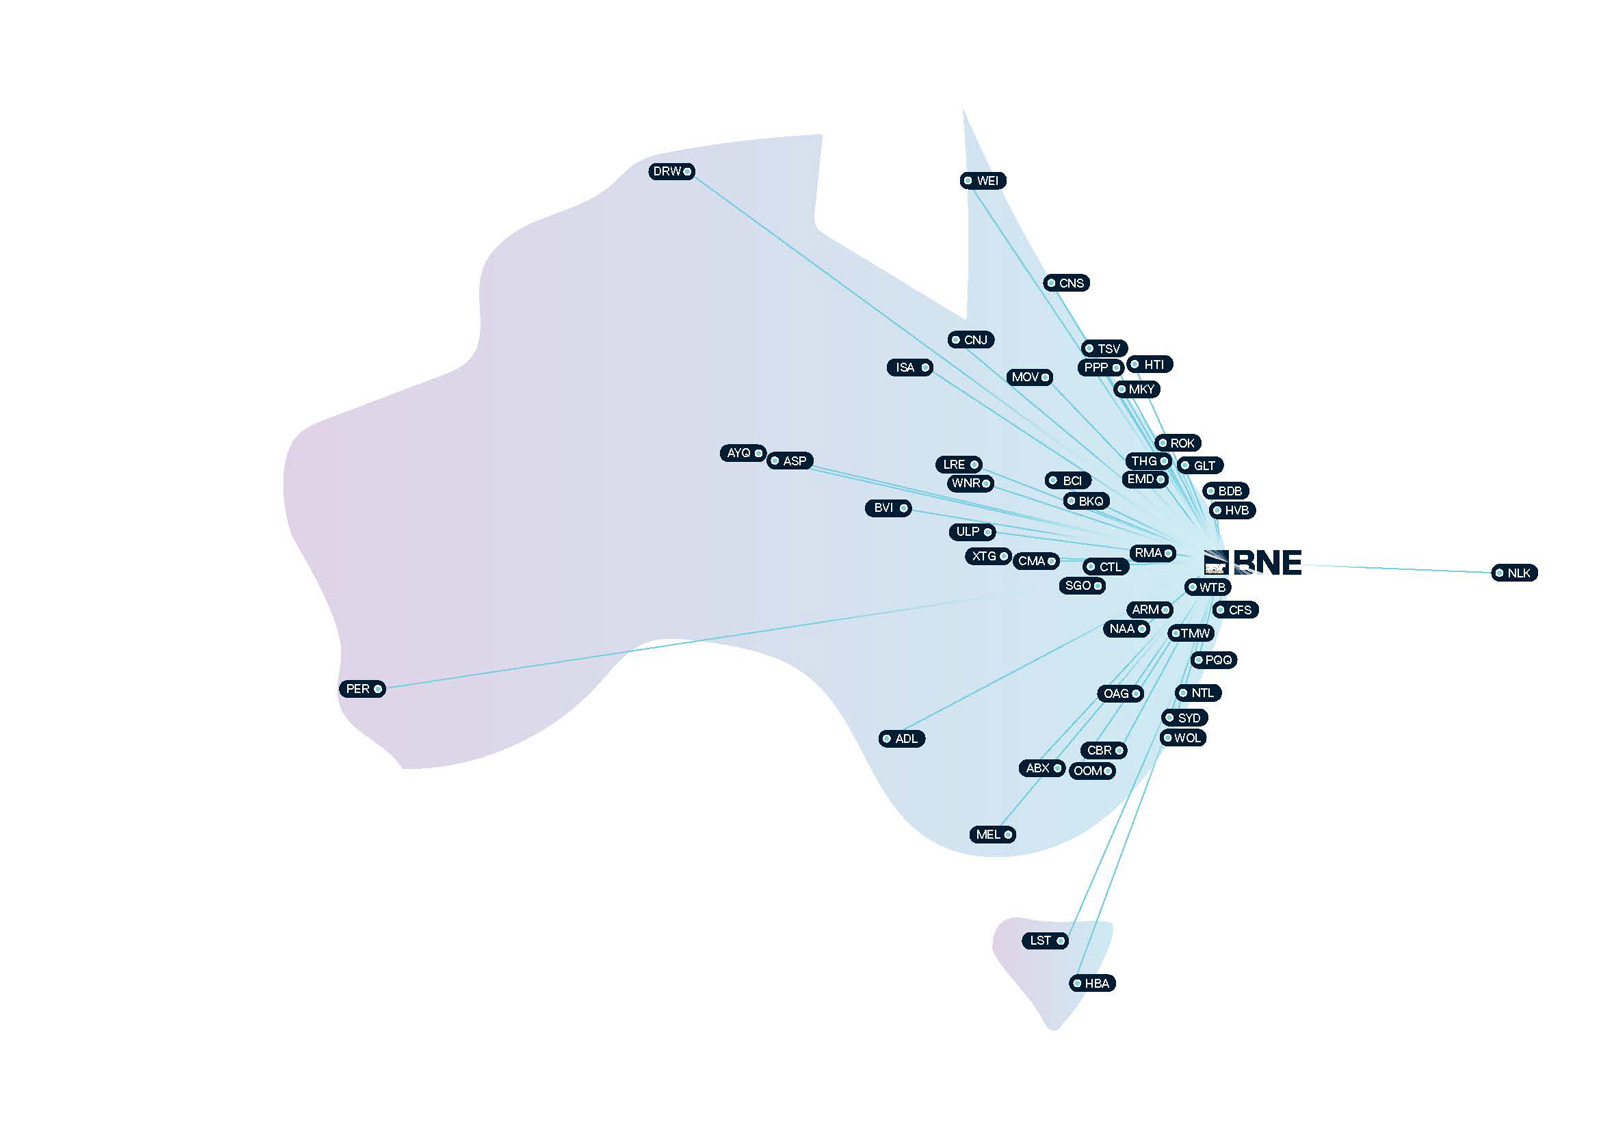 Brisbane Airport's Domestic Network